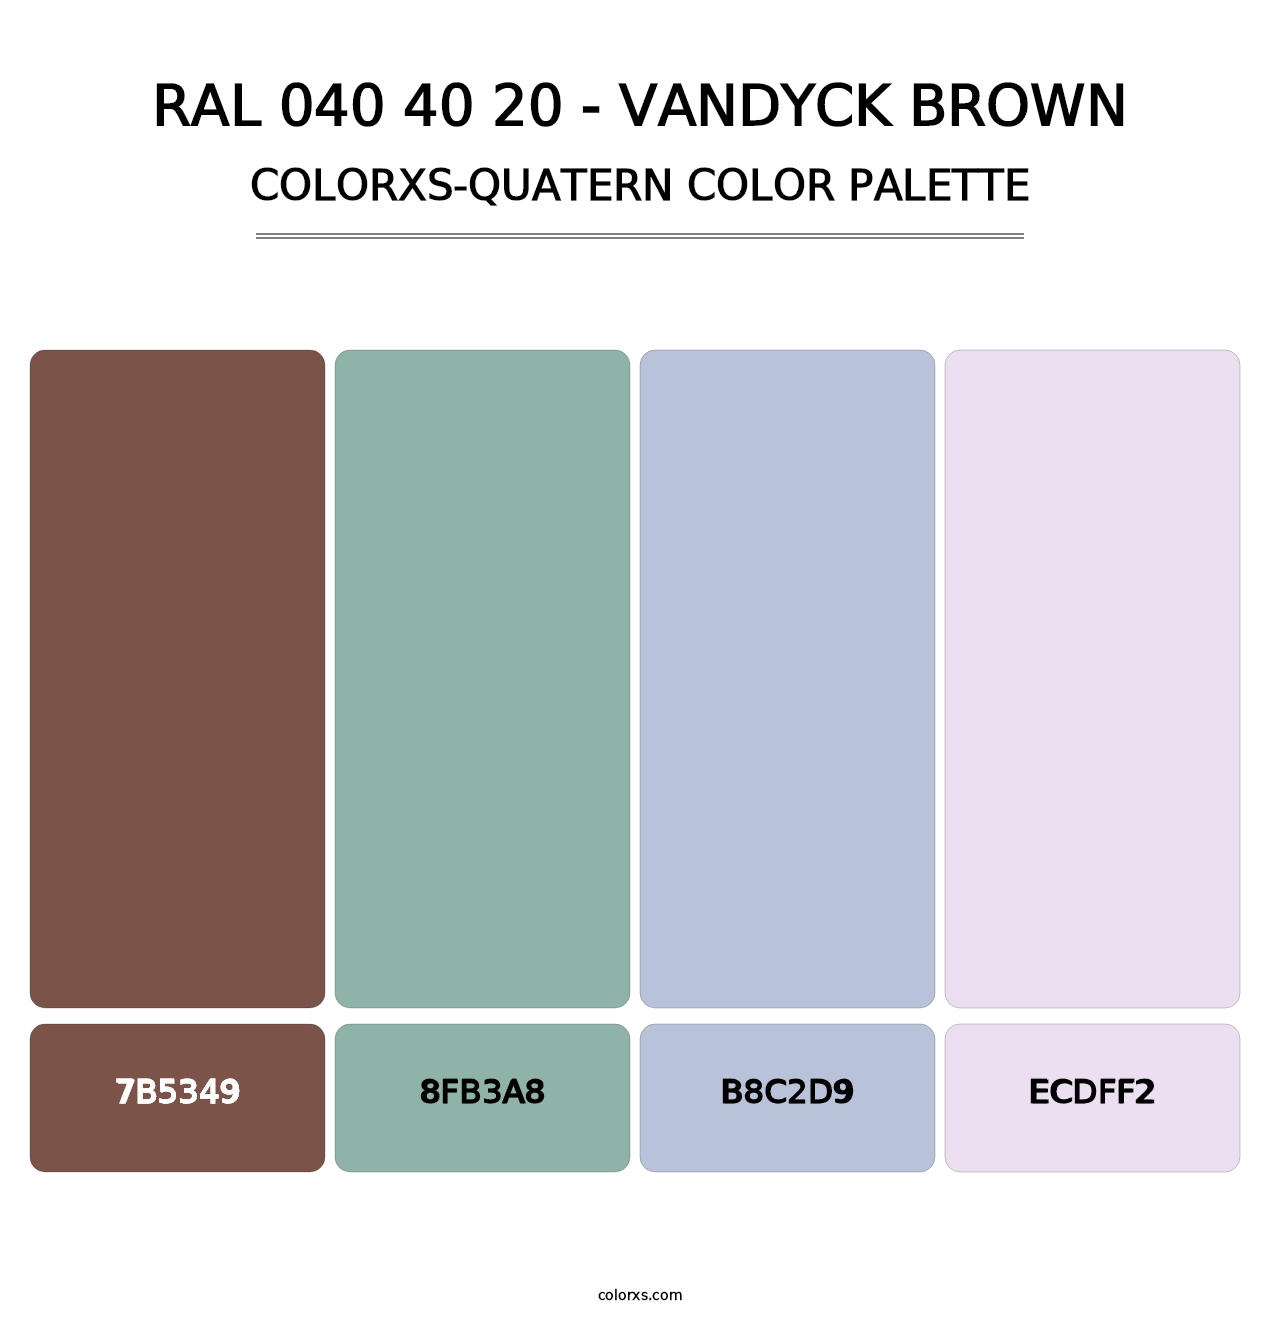 RAL 040 40 20 - Vandyck Brown - Colorxs Quatern Palette